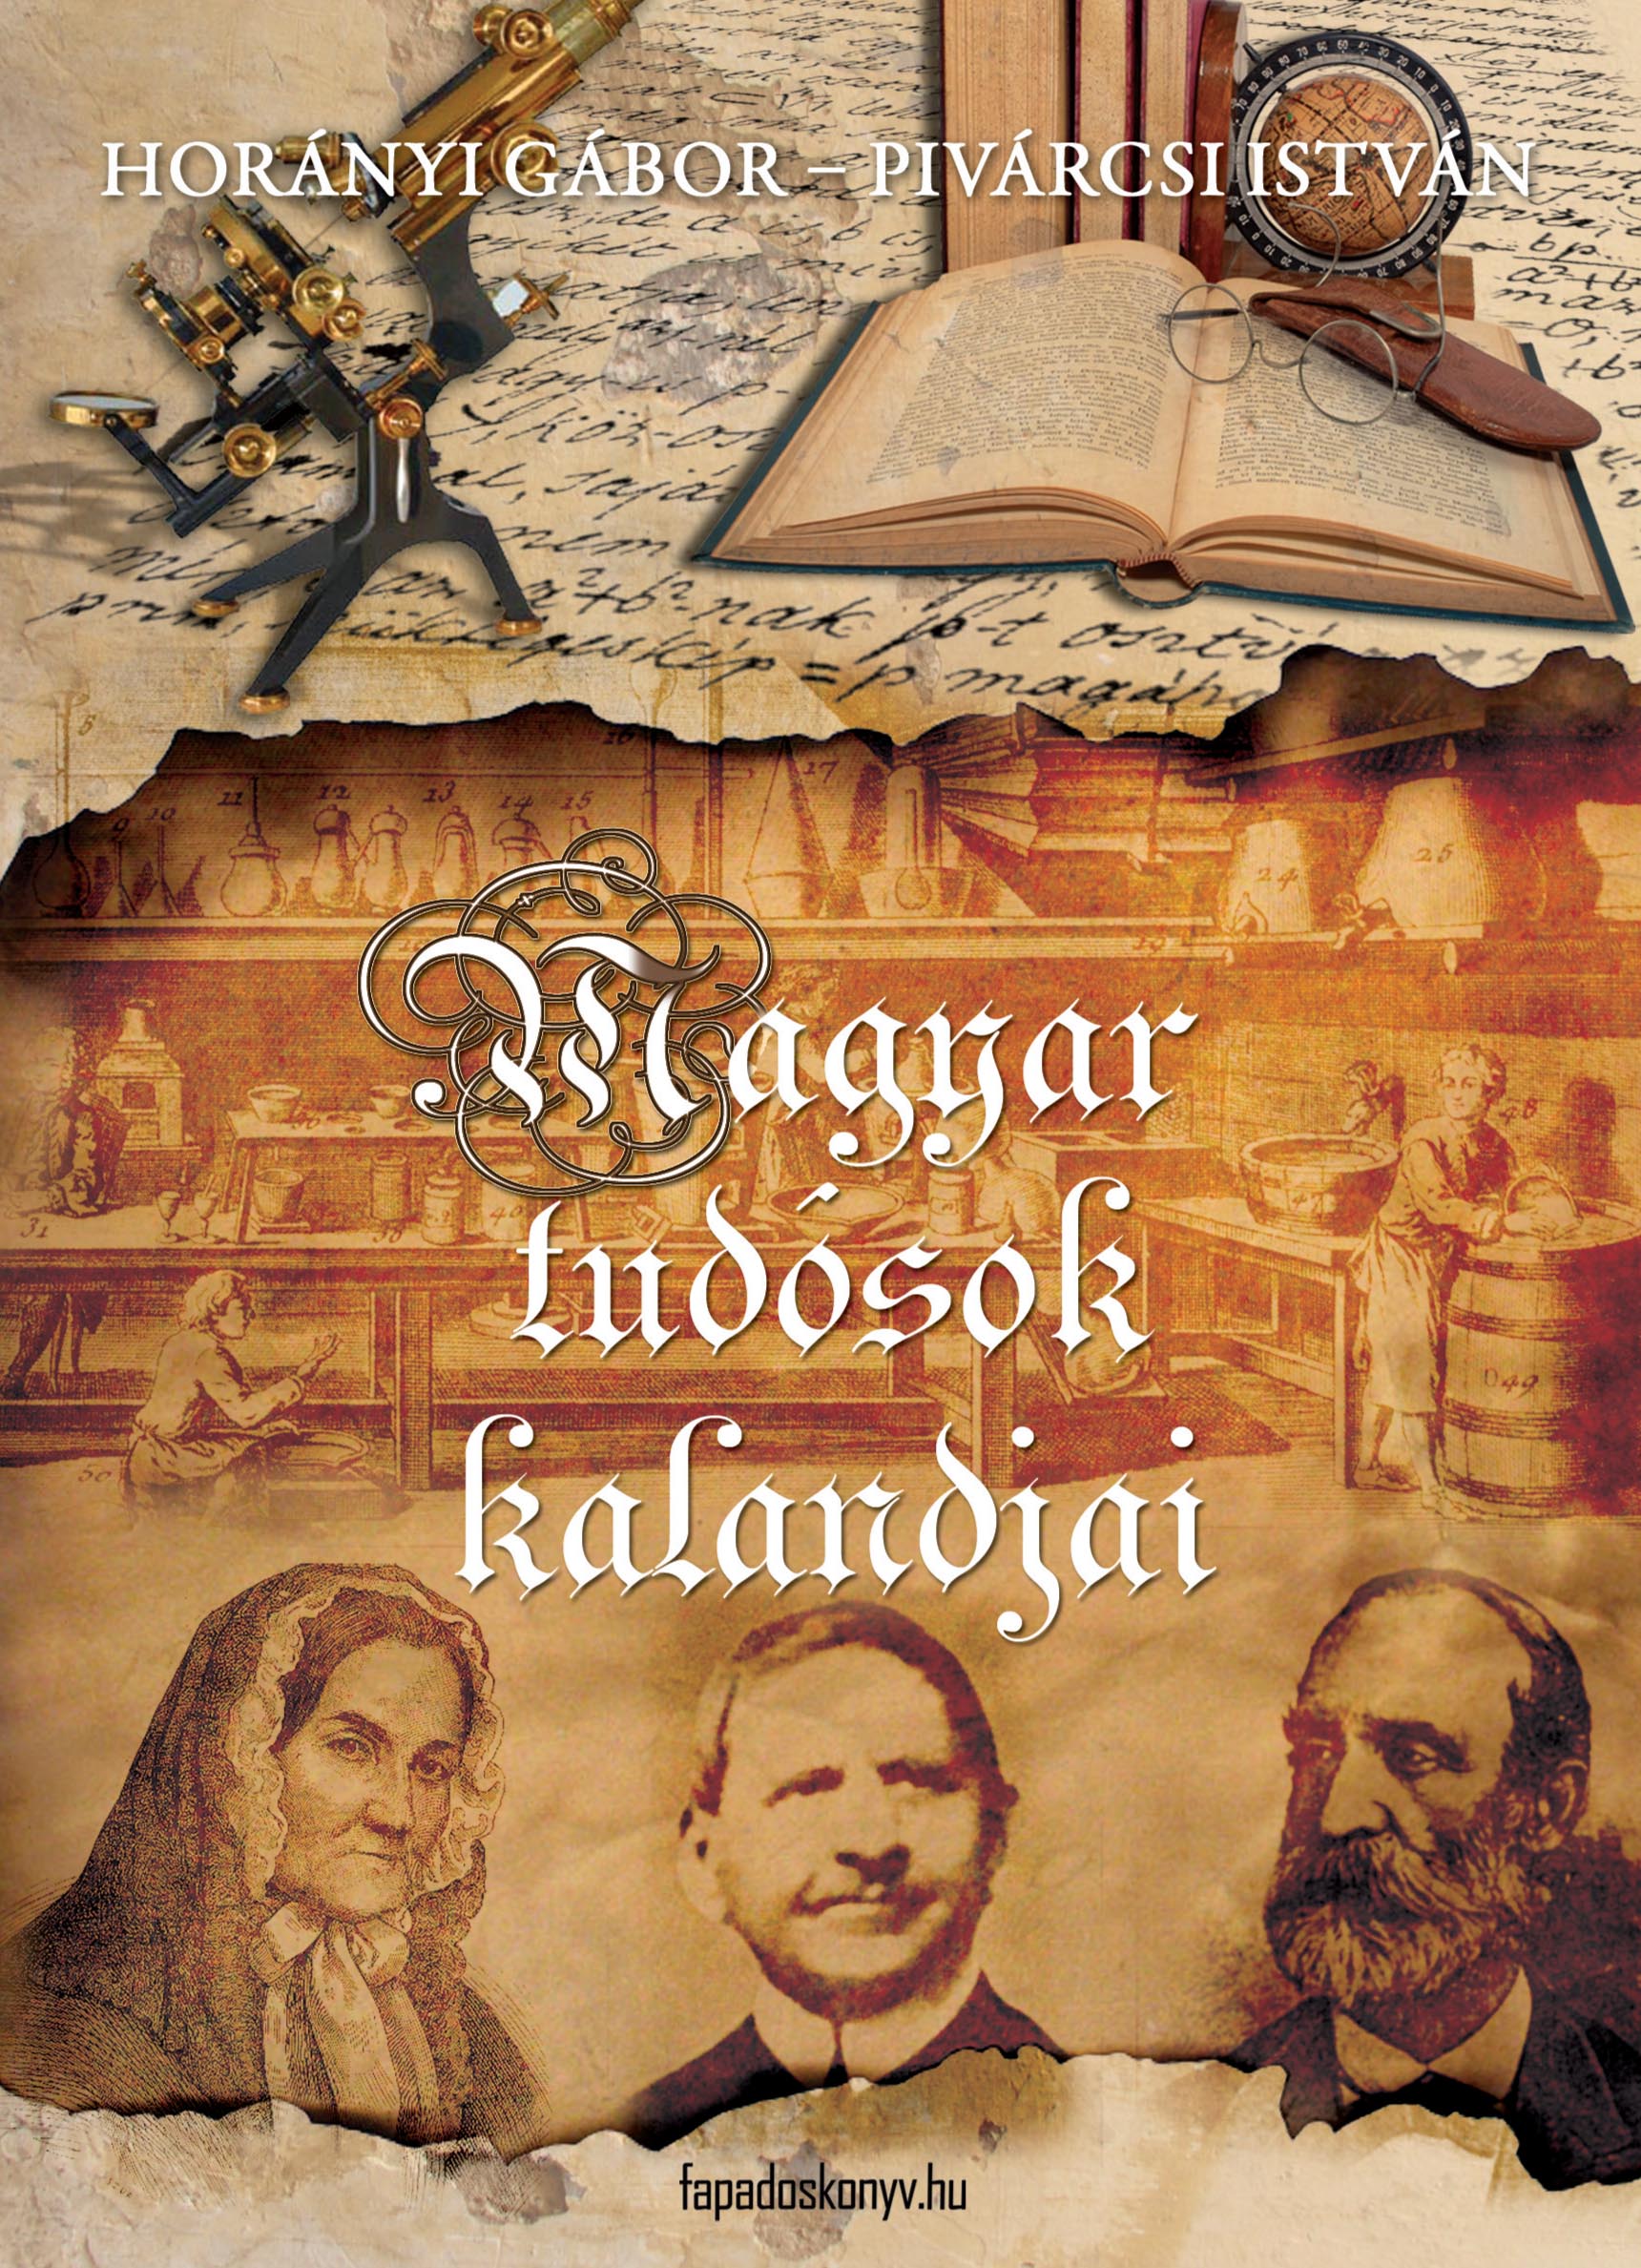 Magyar tudósok kalandjai